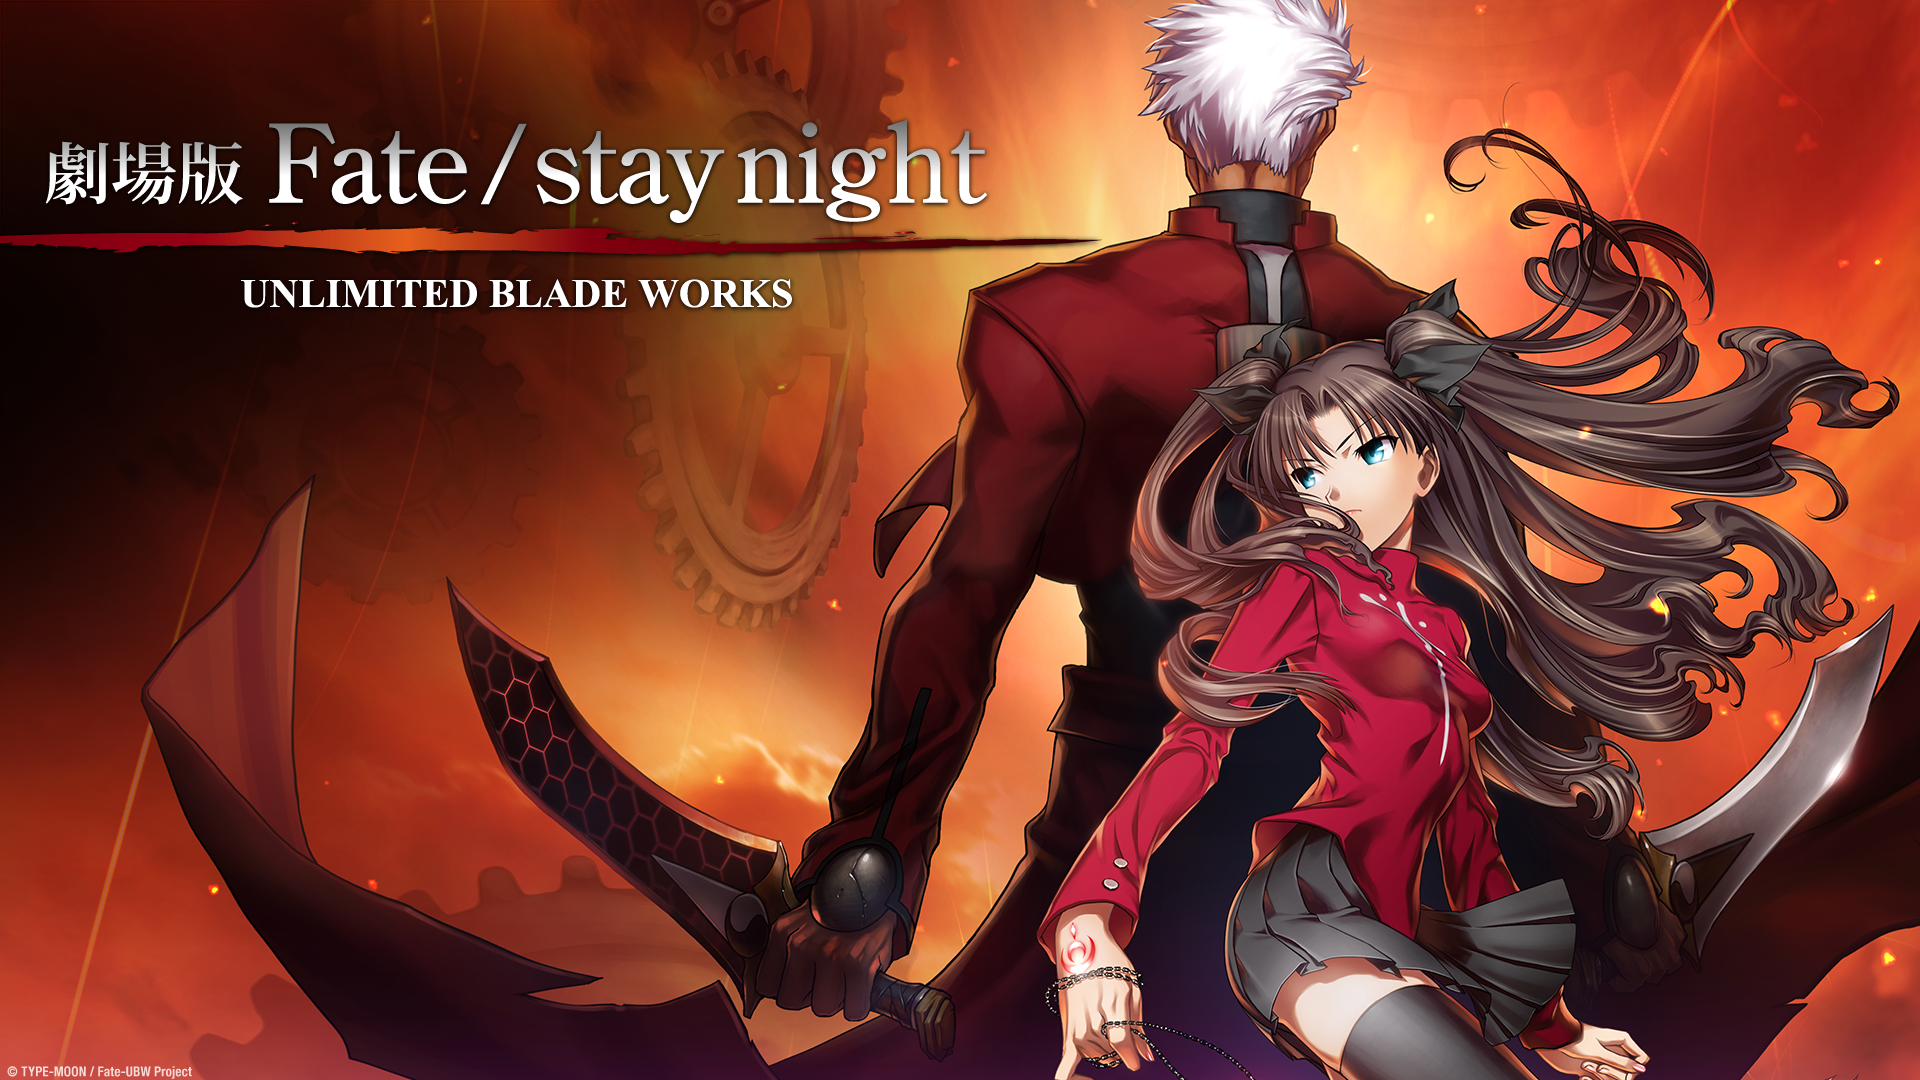 Best Girl - Best Girl Rin 💕 Anime: Fate/stay night